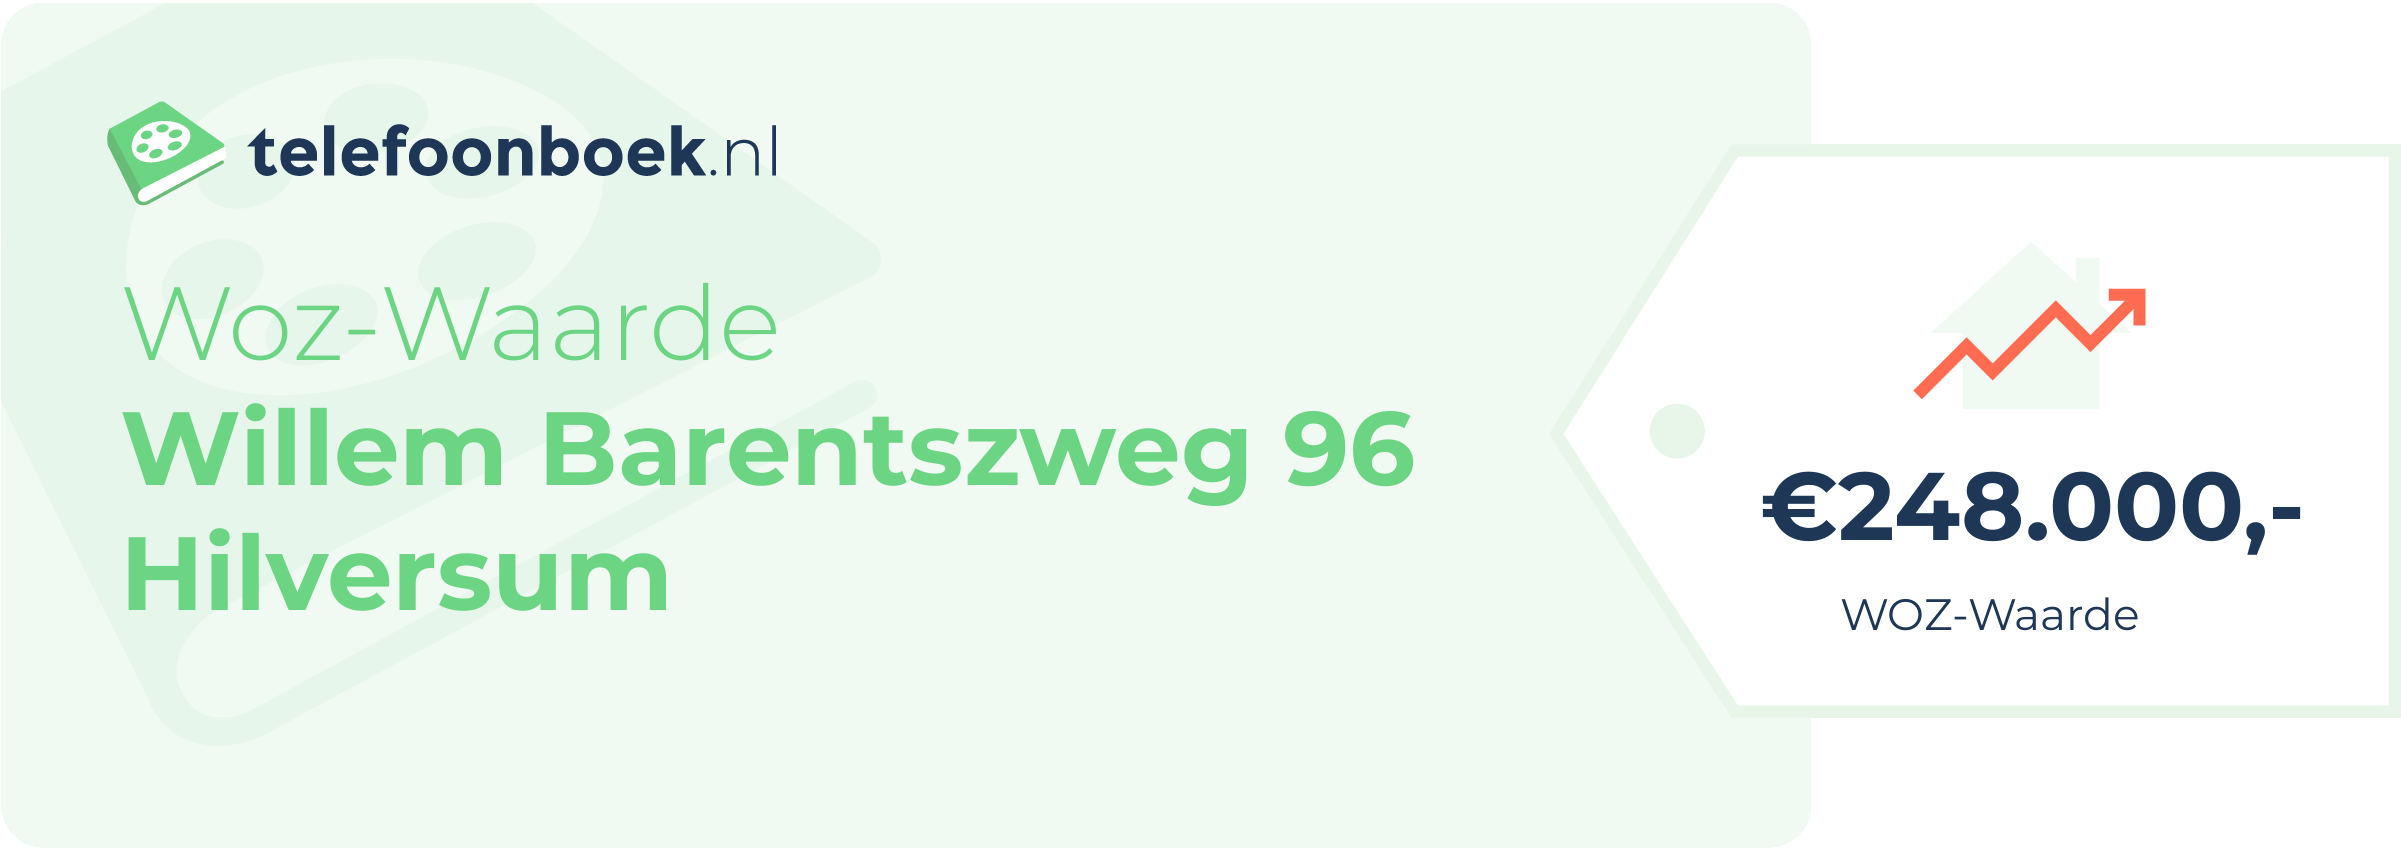 WOZ-waarde Willem Barentszweg 96 Hilversum